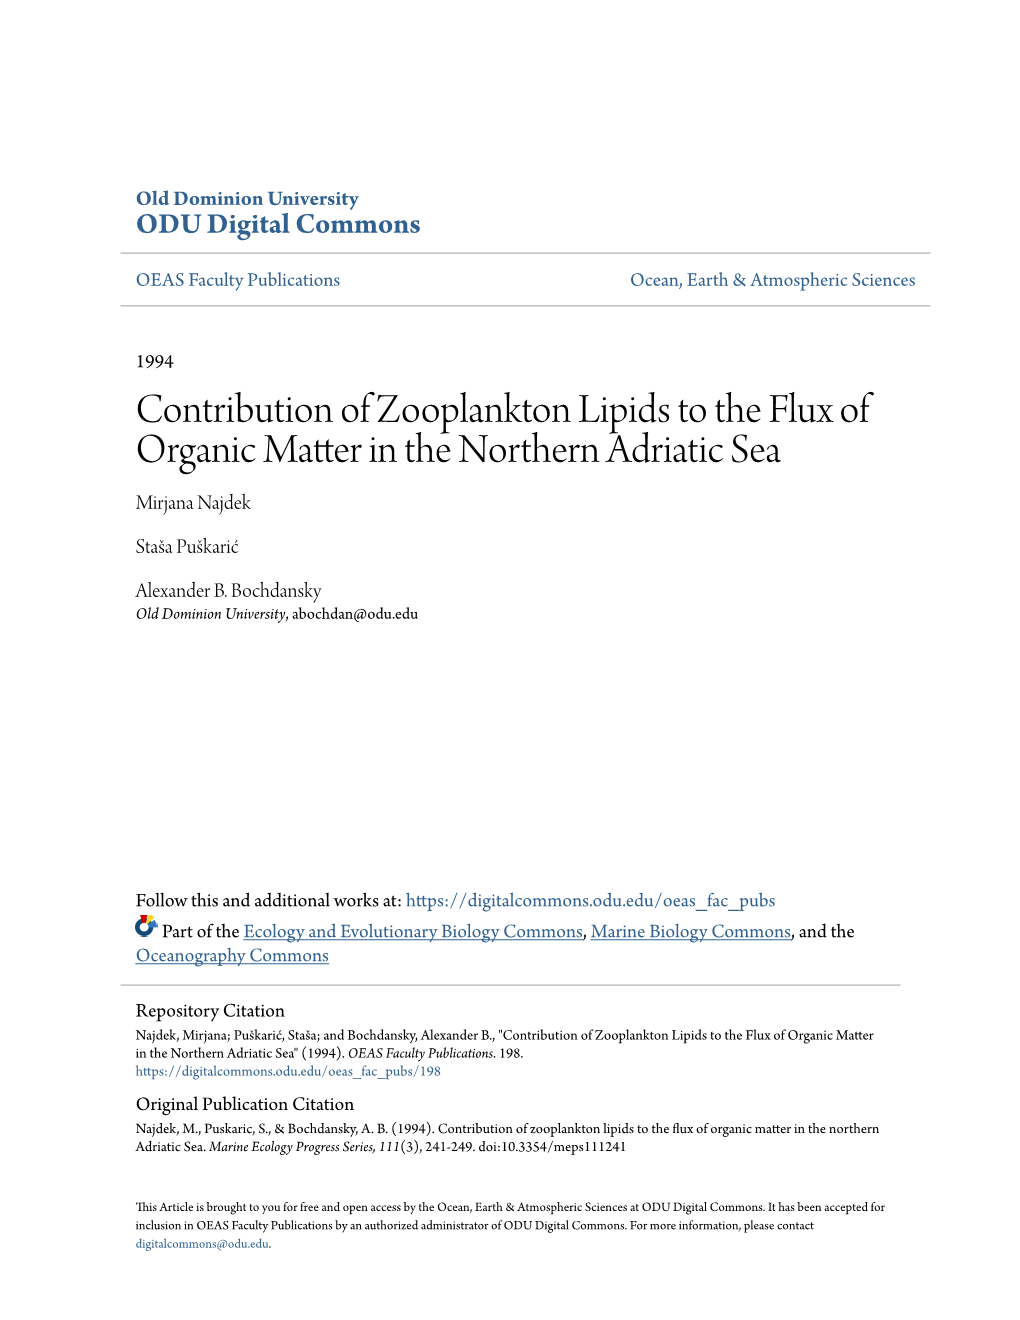 Contribution of Zooplankton Lipids to the Flux of Organic Matter in the Northern Adriatic Sea Mirjana Najdek